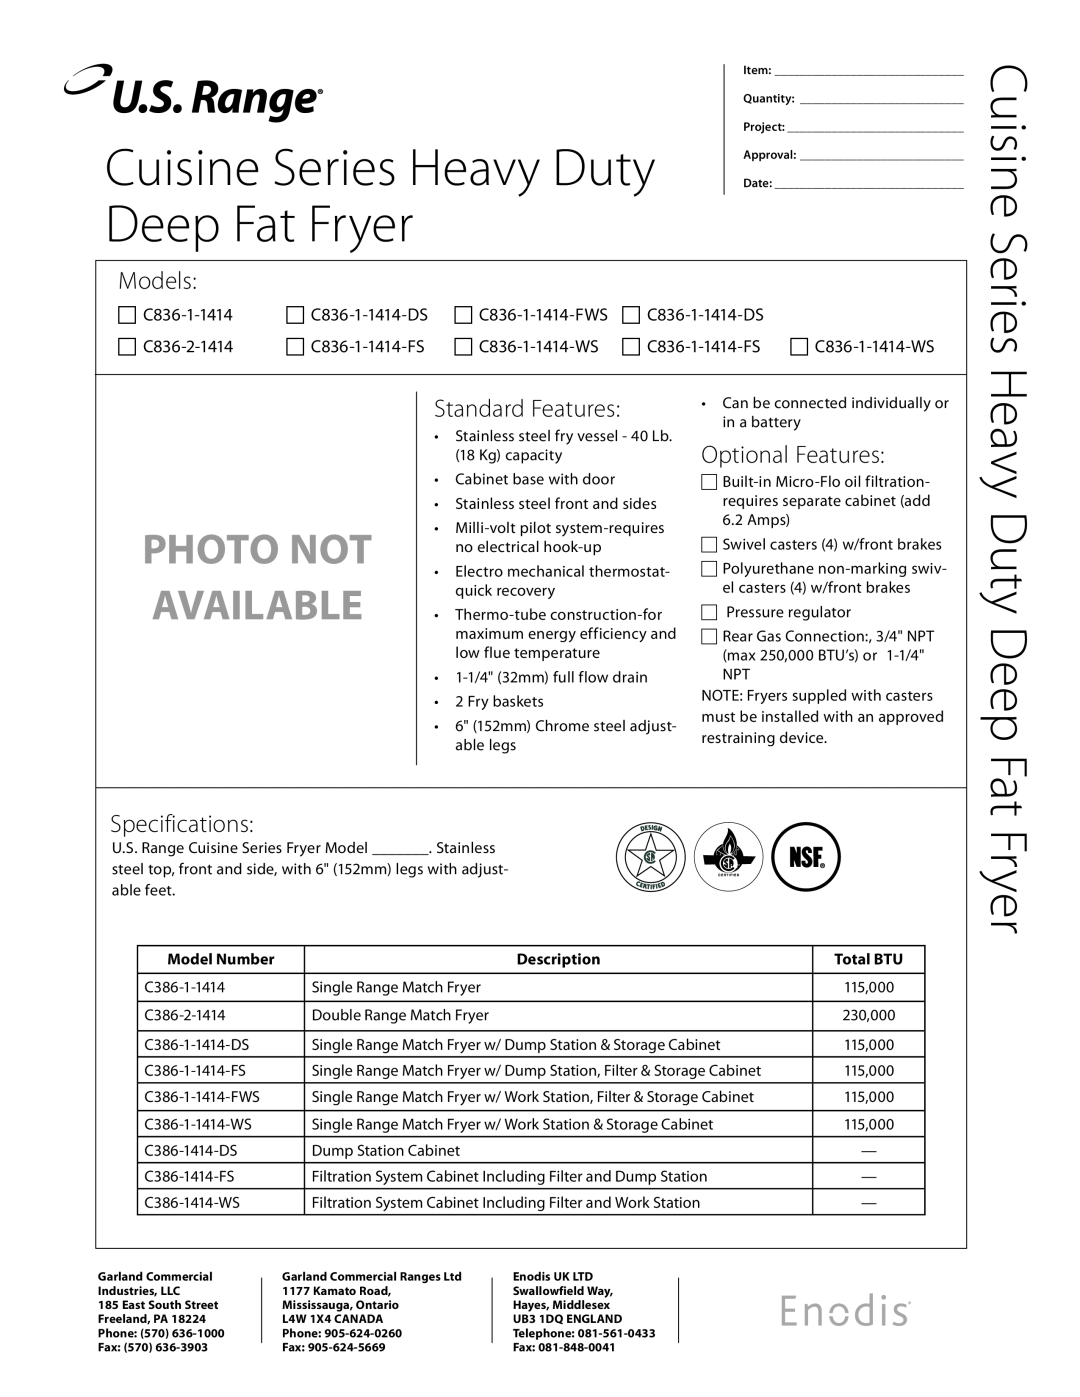 Garland C836-1-1414-FWS specifications Cuisine Series Heavy Duty Deep Fat Fryer, Models, Standard Features, Specifications 